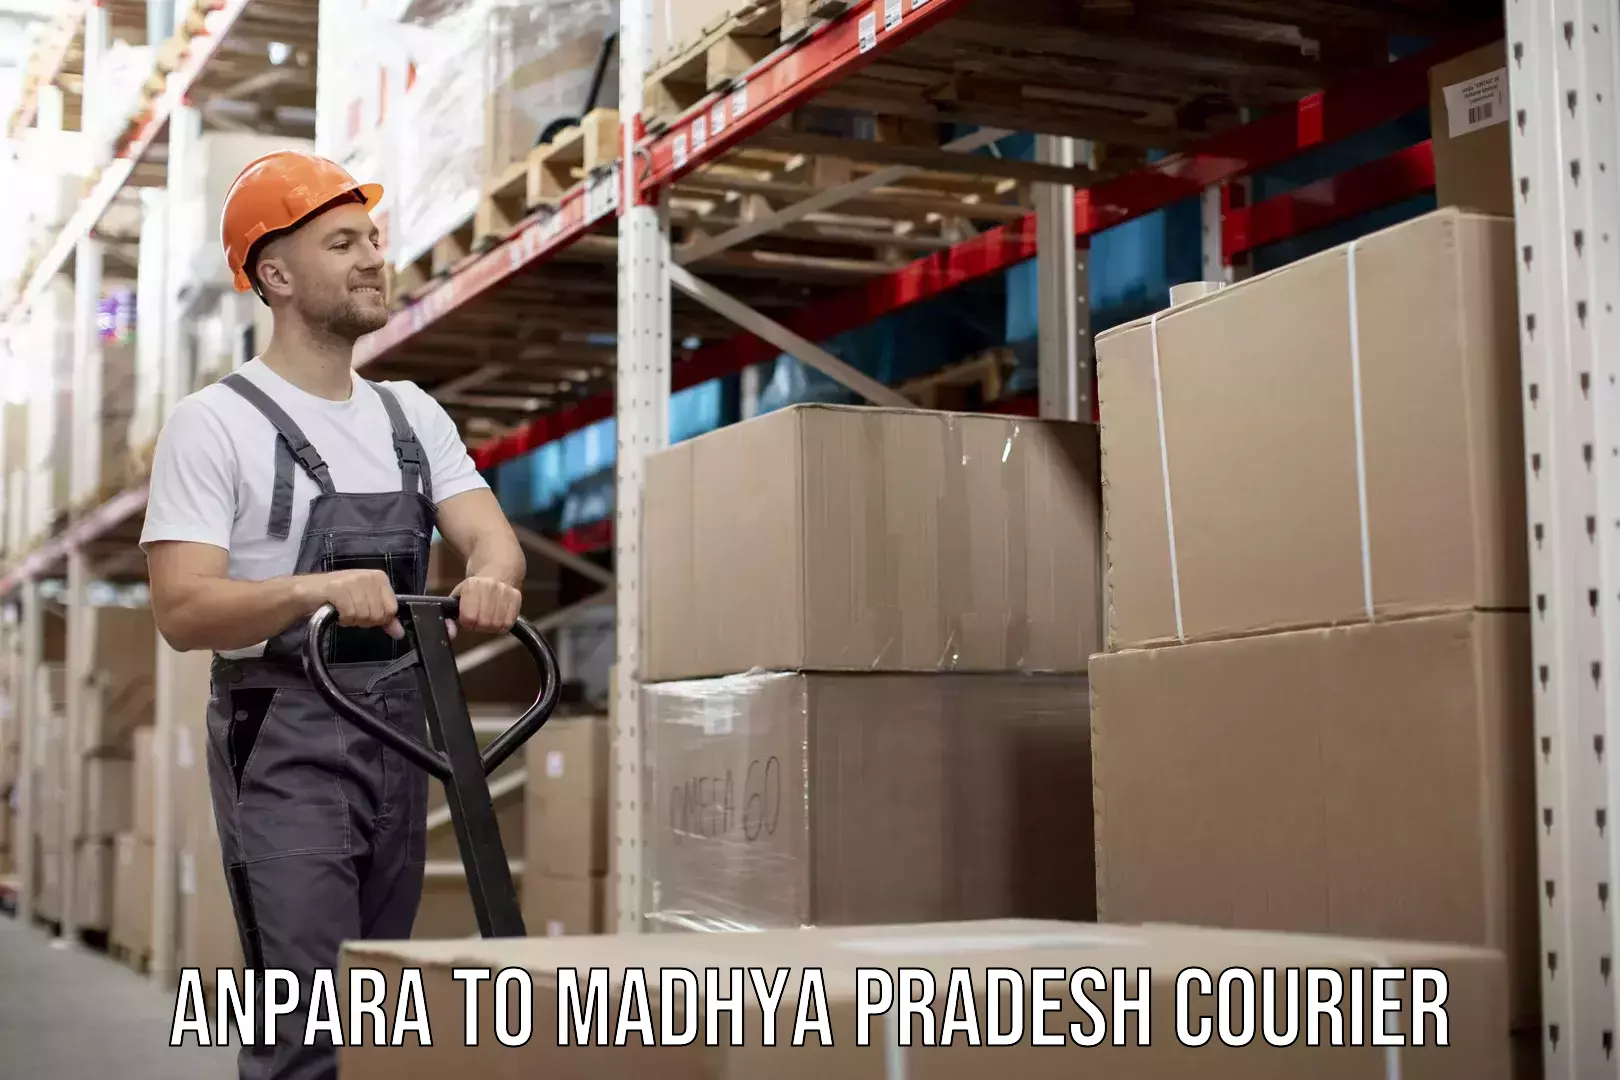 Multi-service courier options Anpara to Madhya Pradesh